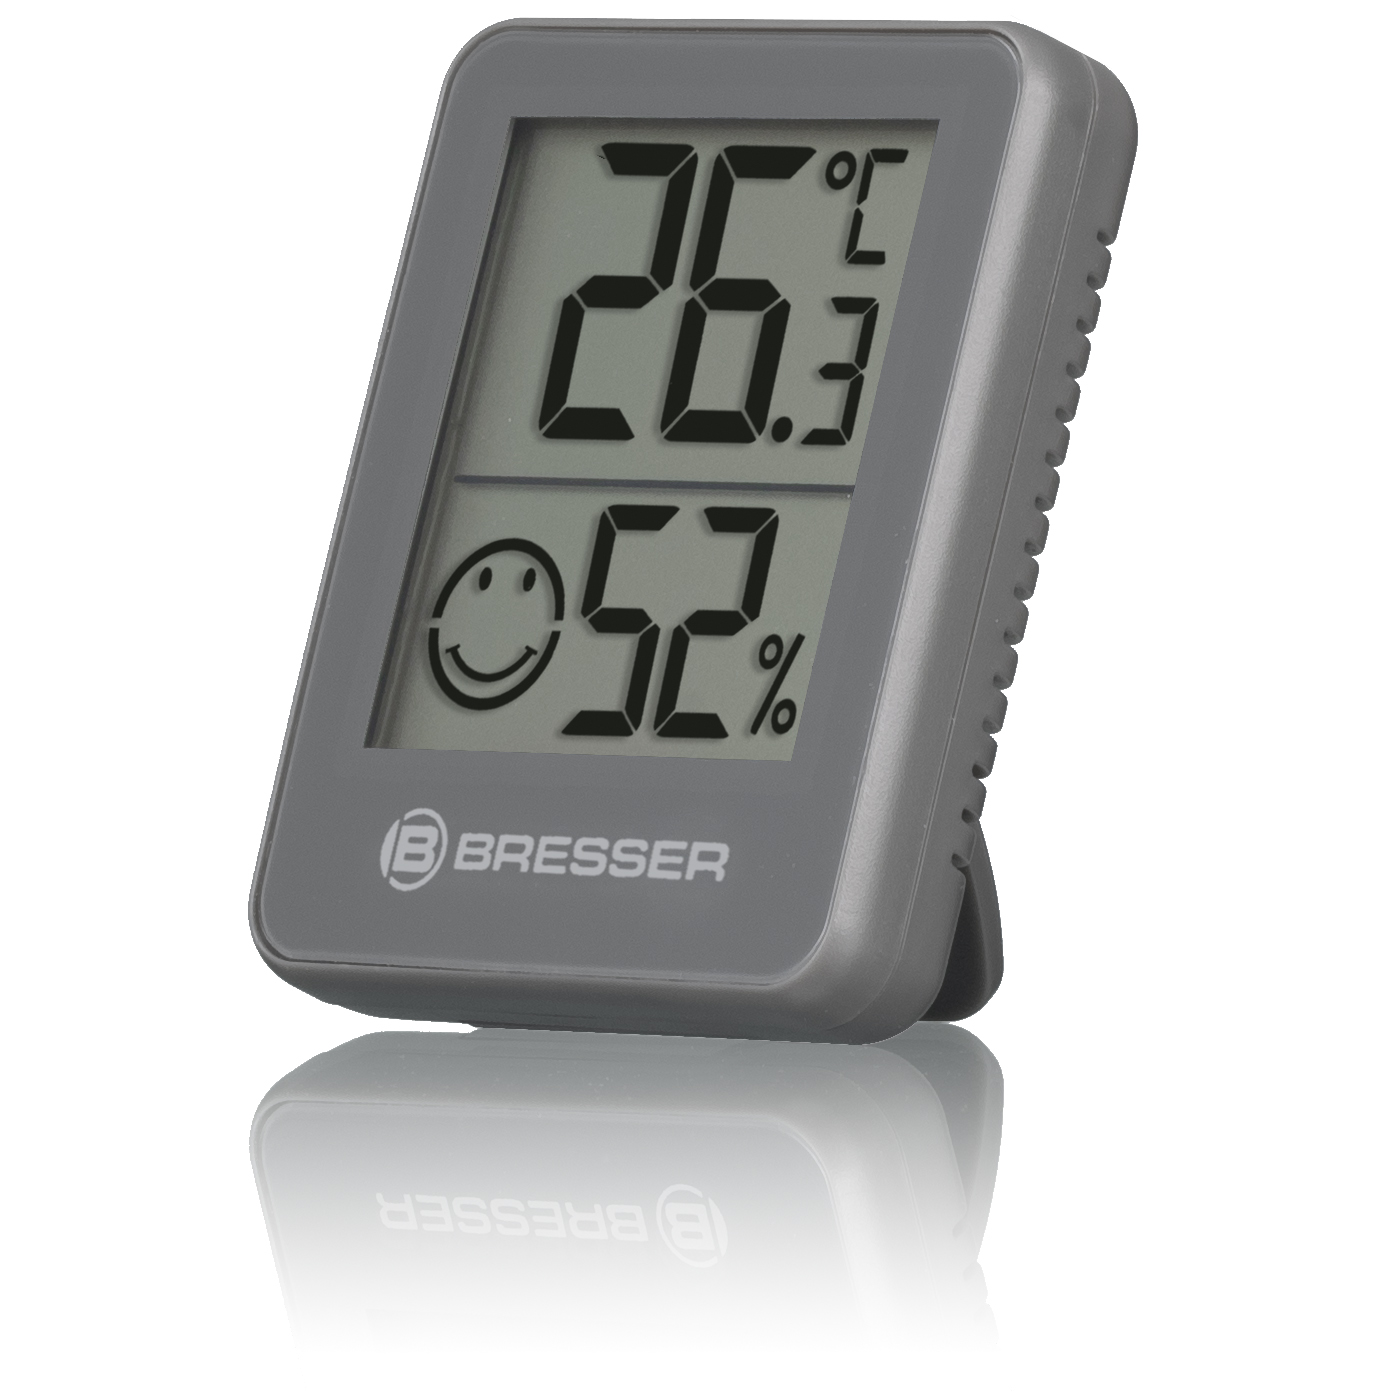 Indikator Wetterstation 6er-Set Temeo Hygro BRESSER Thermo-/Hygrometer